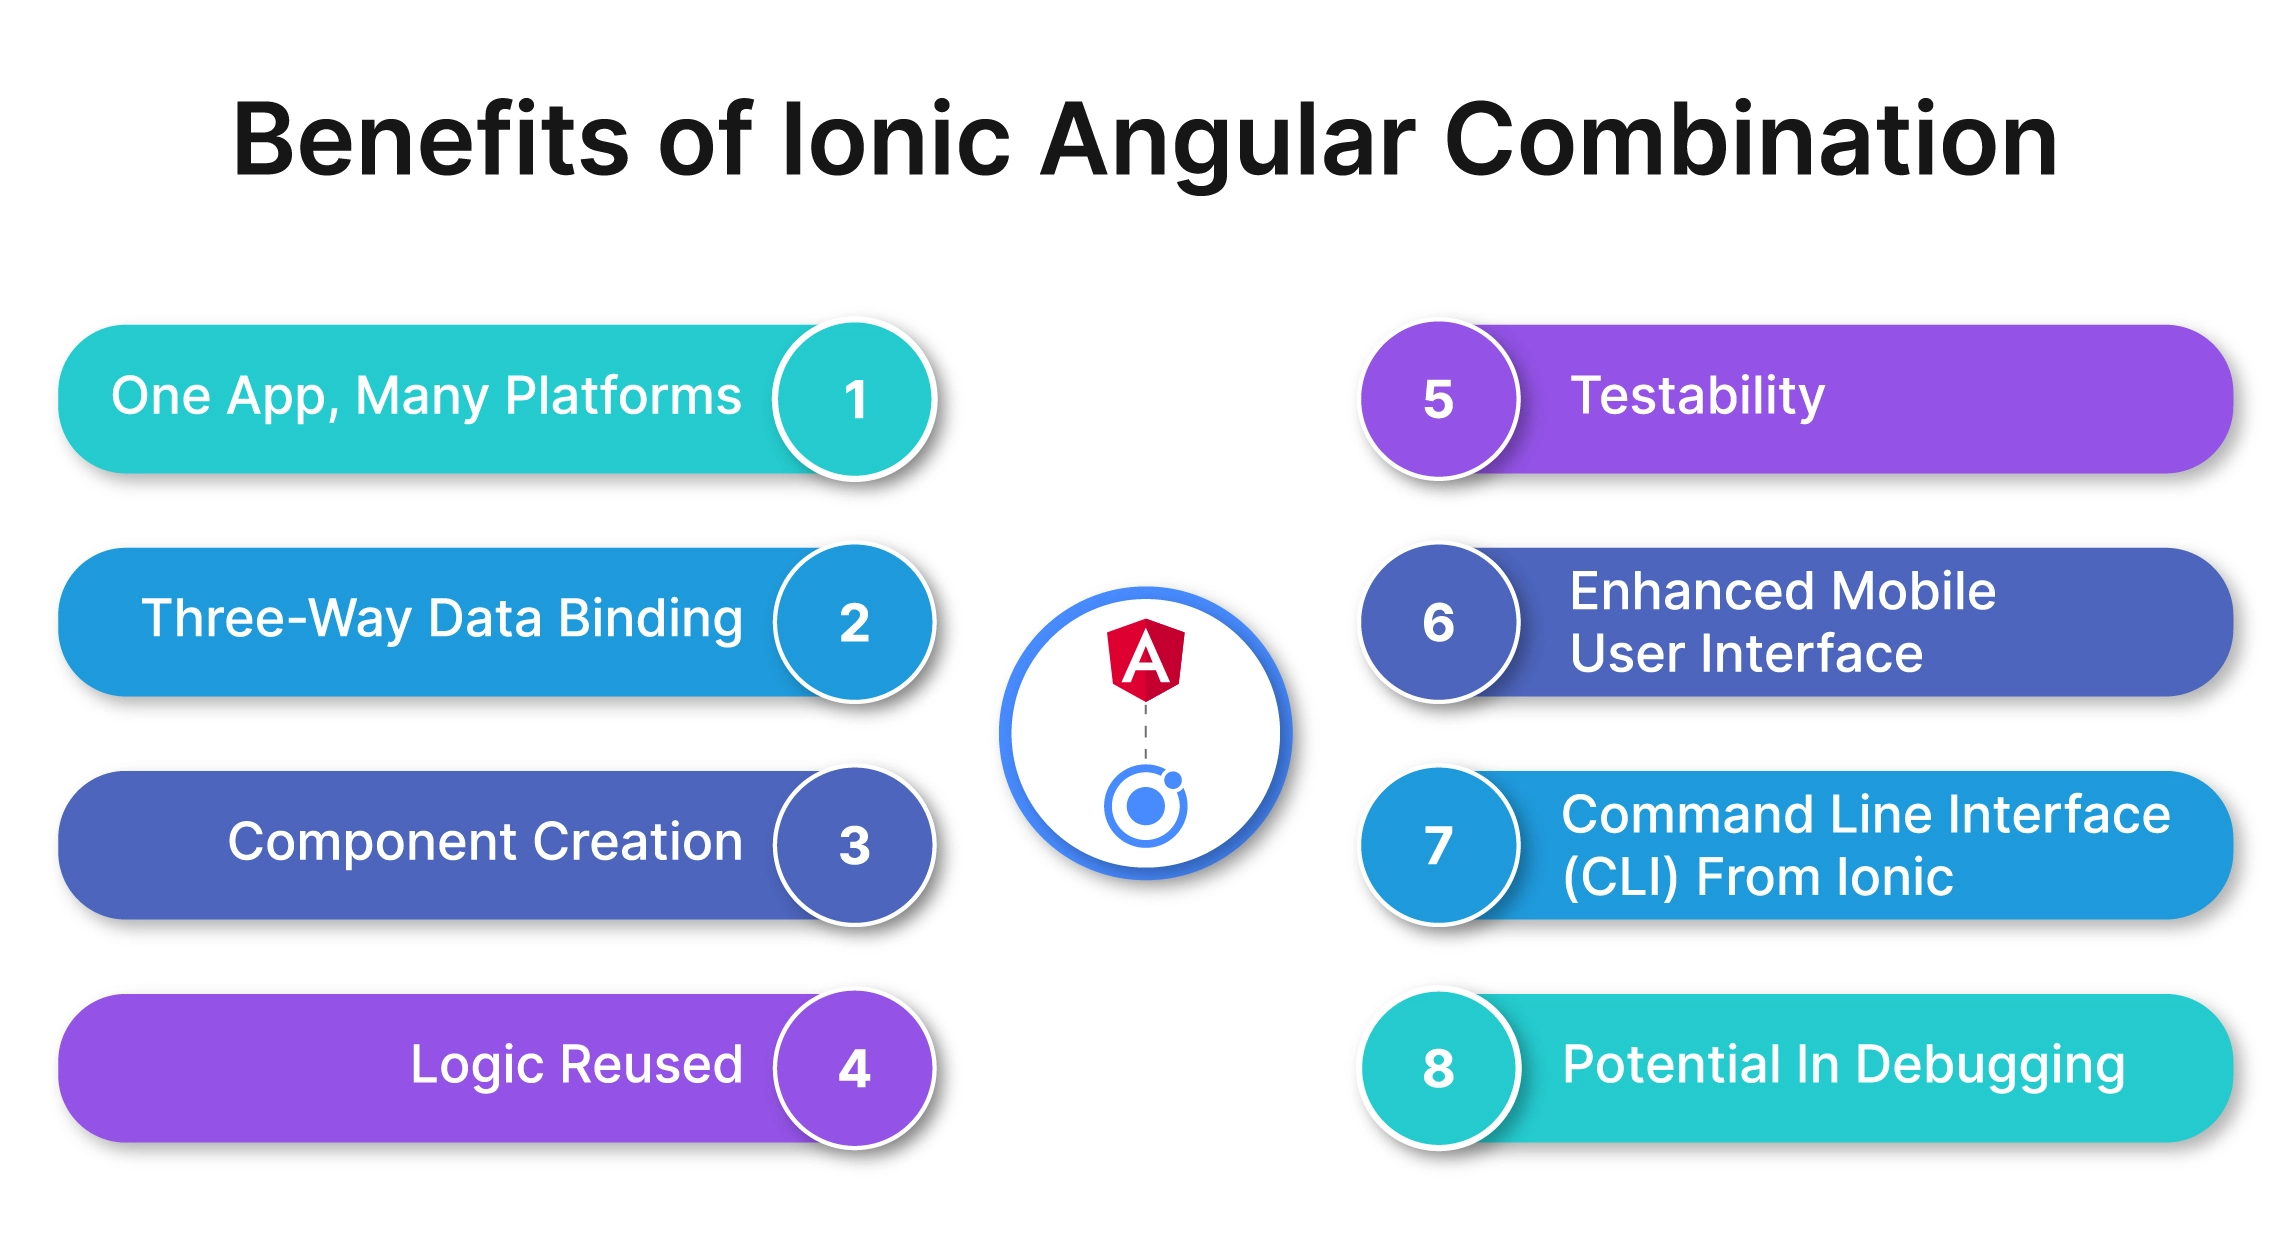 Benefits of Ionic Angular Combination